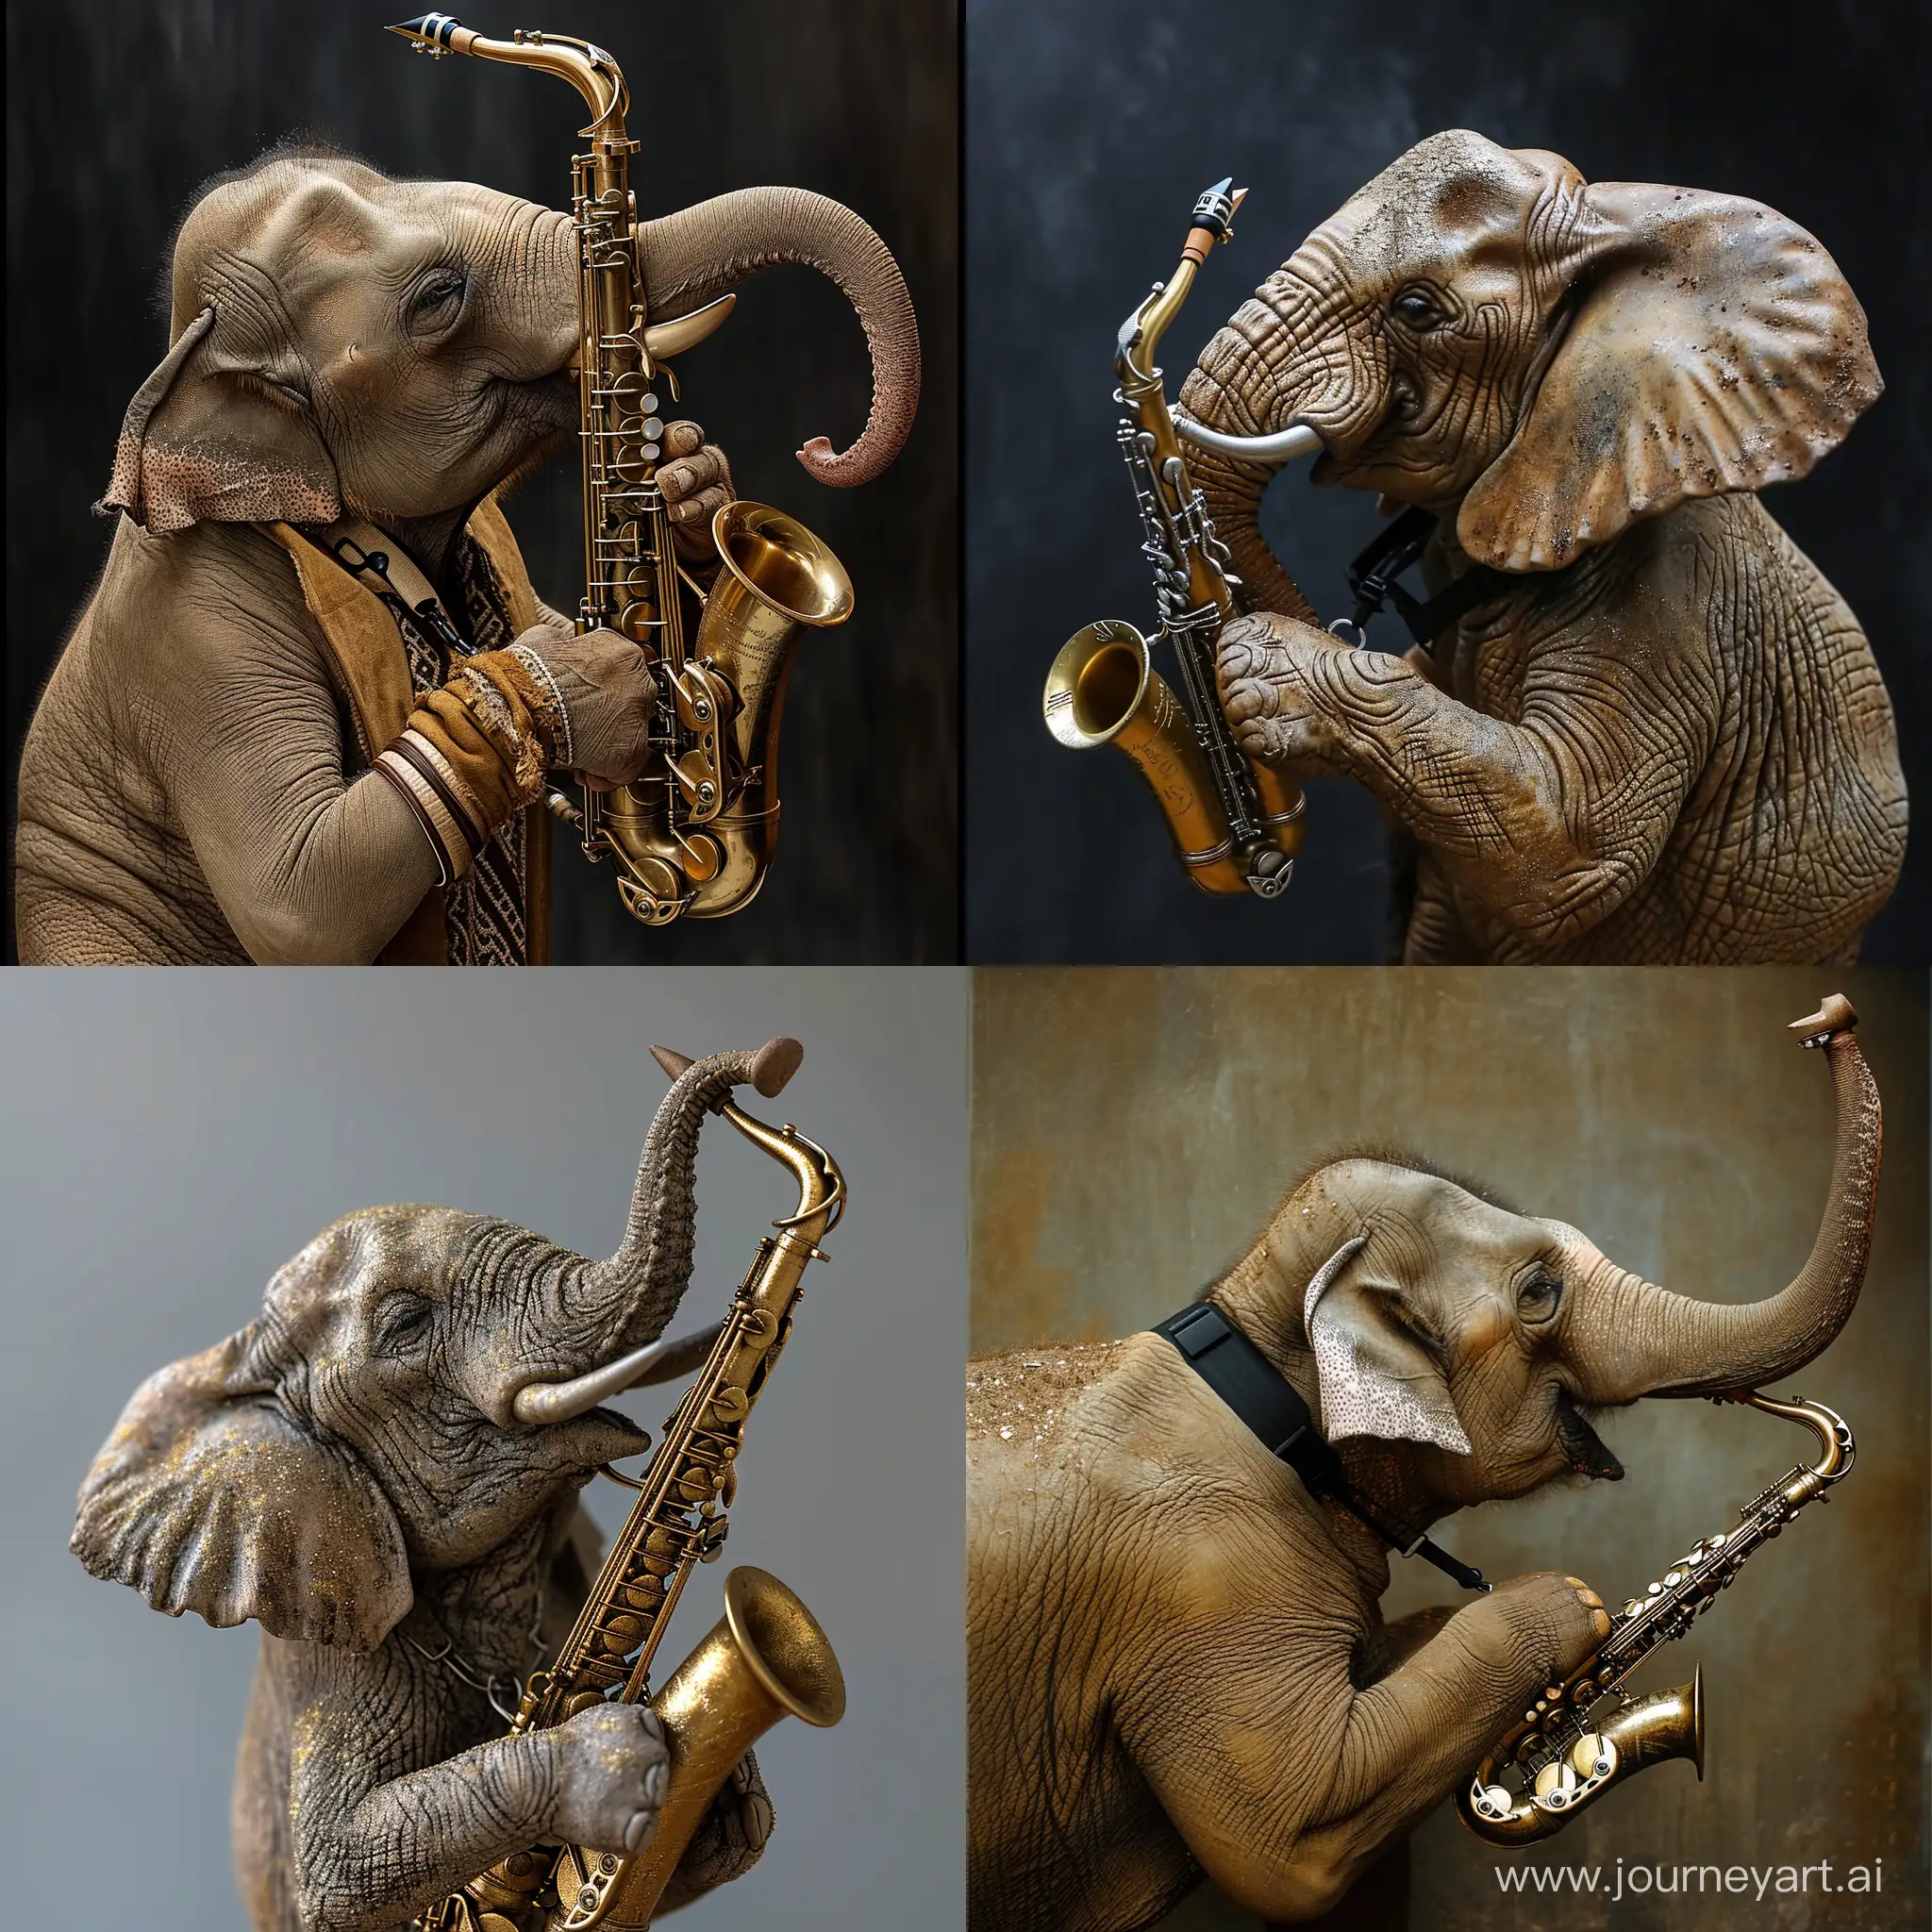 Majestic-Elephant-Playing-a-Vibrant-Saxophone